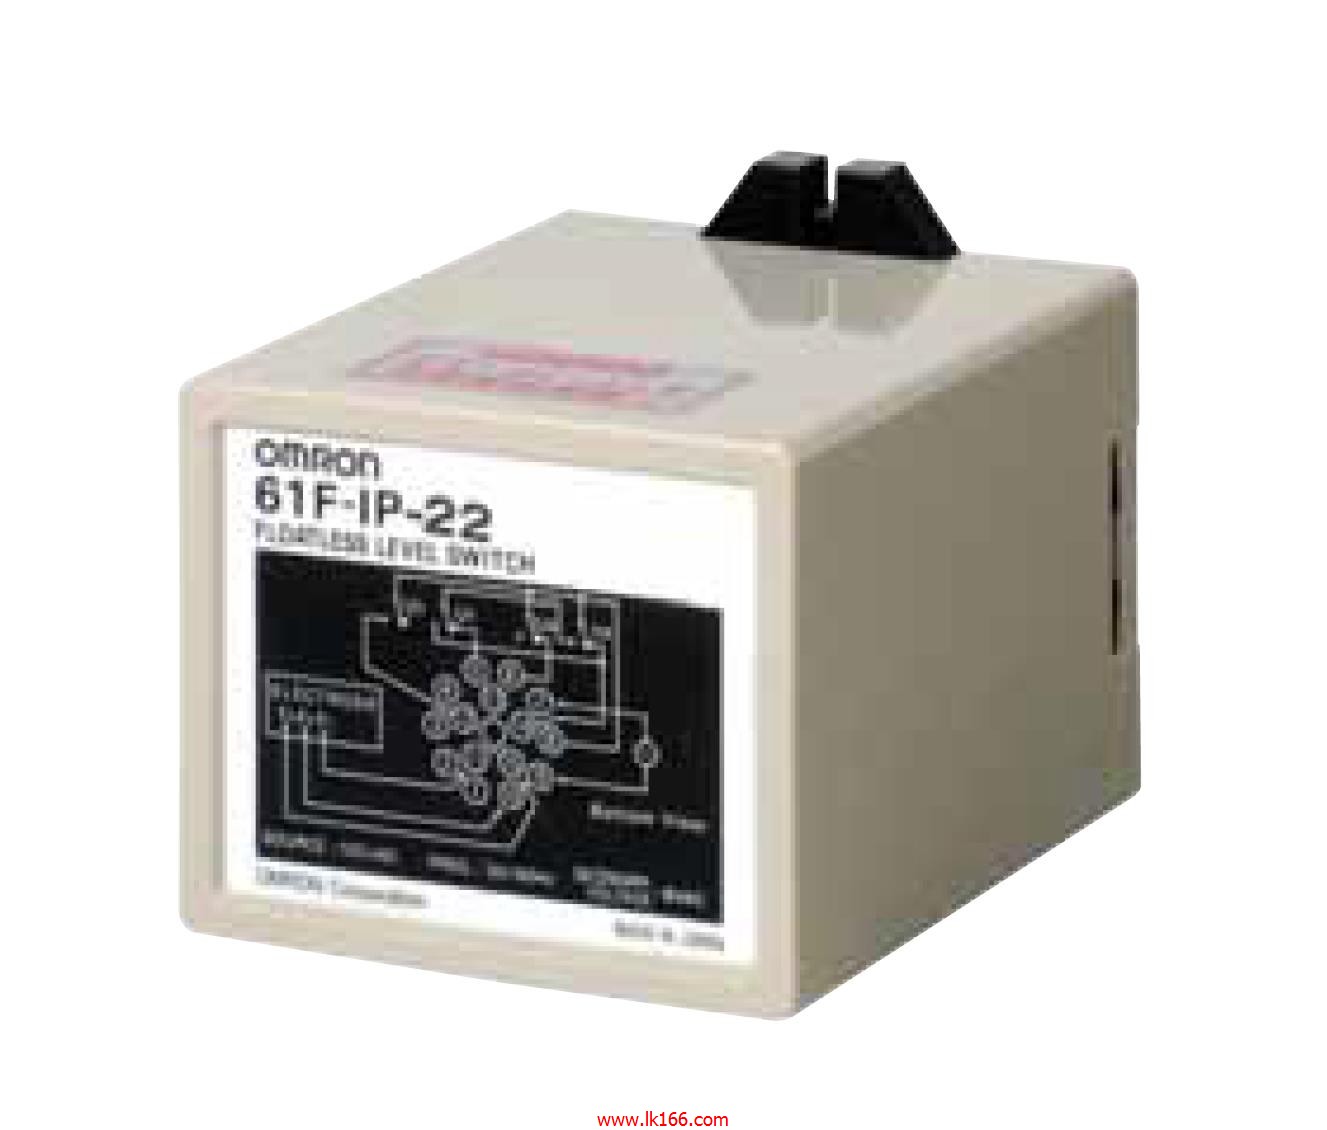 OMRON Floatless Level Switch (Plug-in Type) 61F-IPL 4KM